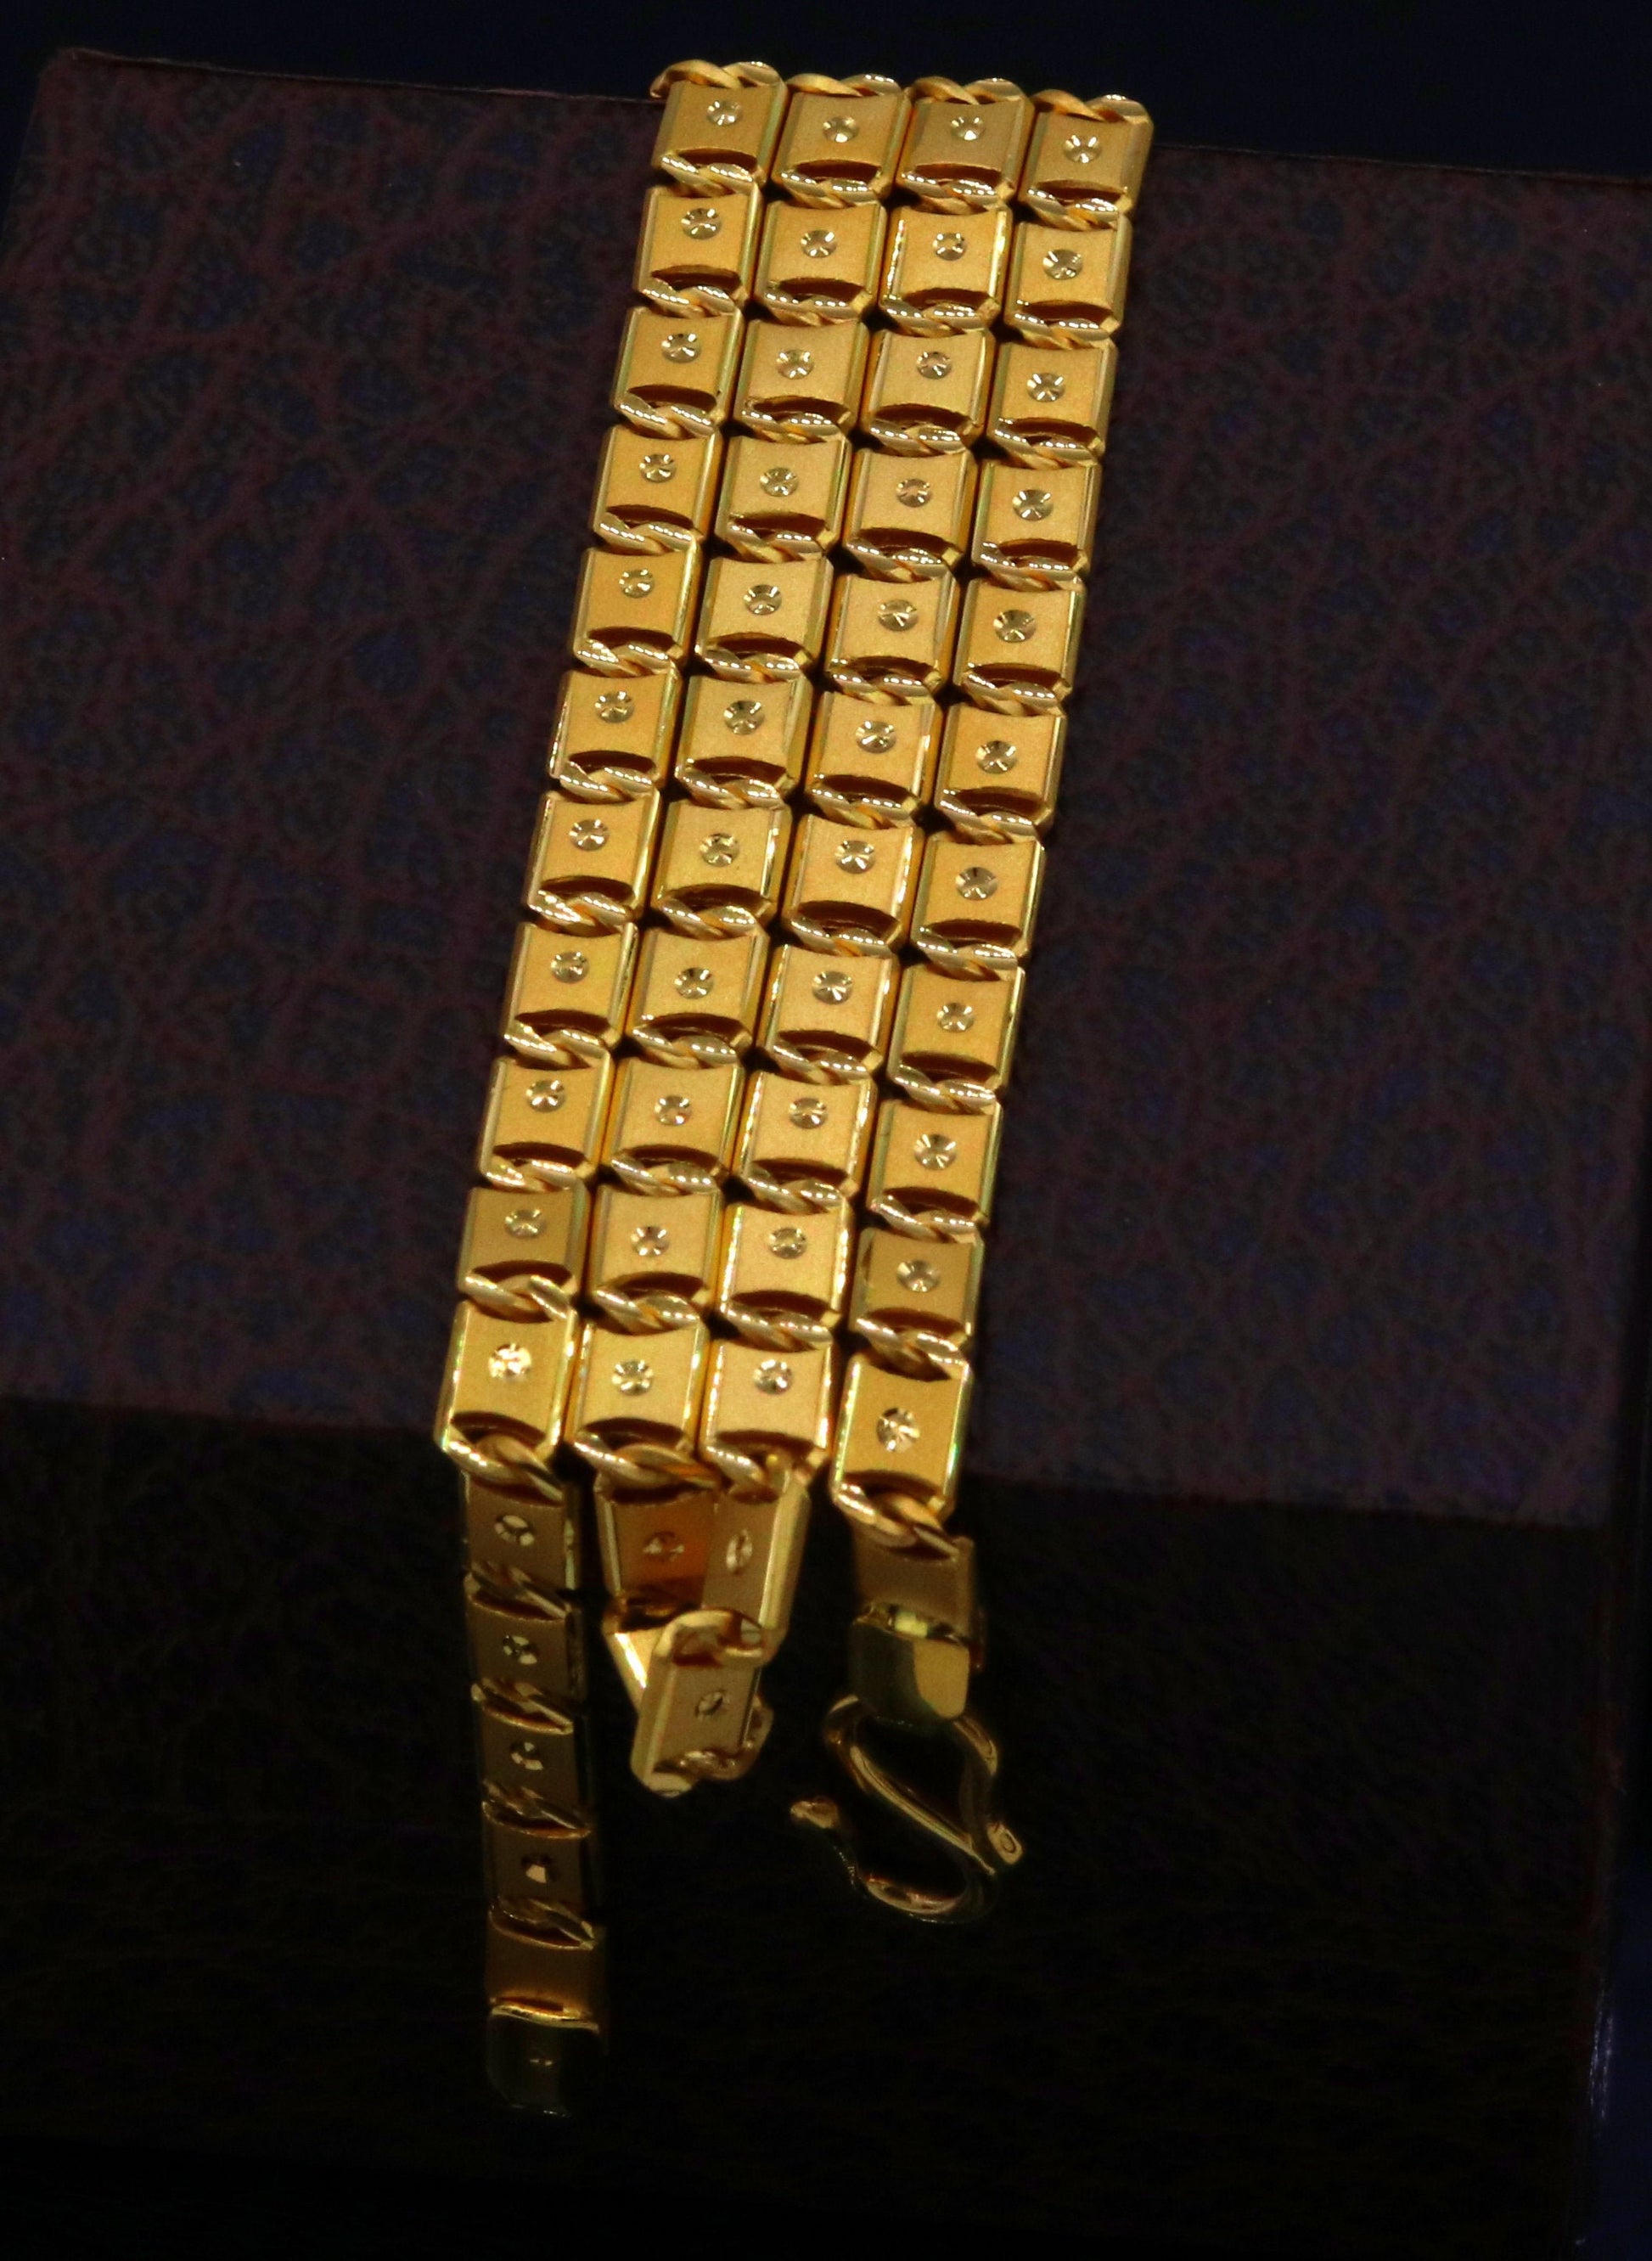 91.6% Gold chain Indian Handmade 22karat yellow gold fabulous nawabi chain men's women's necklace 20 inches unisex designer jewelry - TRIBAL ORNAMENTS